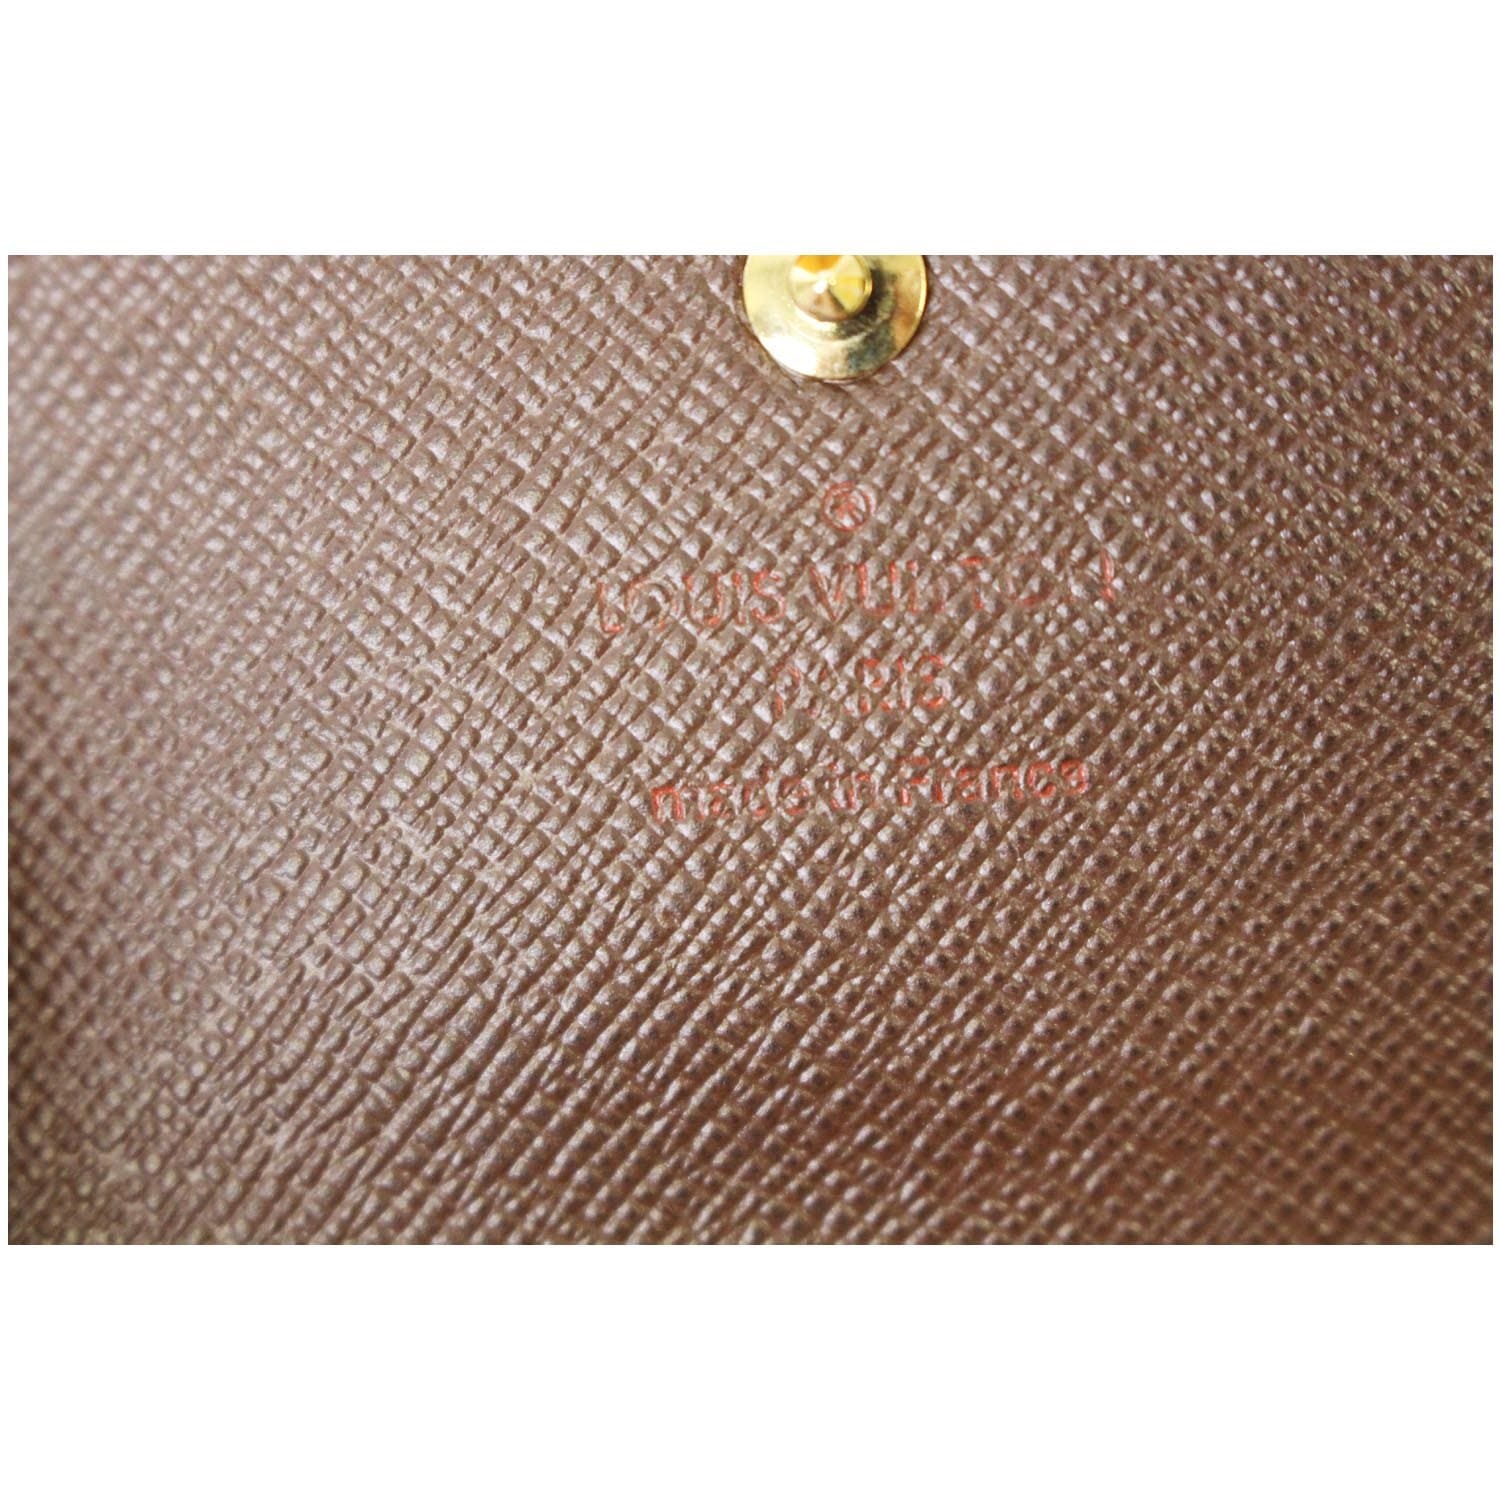 Louis Vuitton 6 Key Holder Damier Graphite Black 1967942